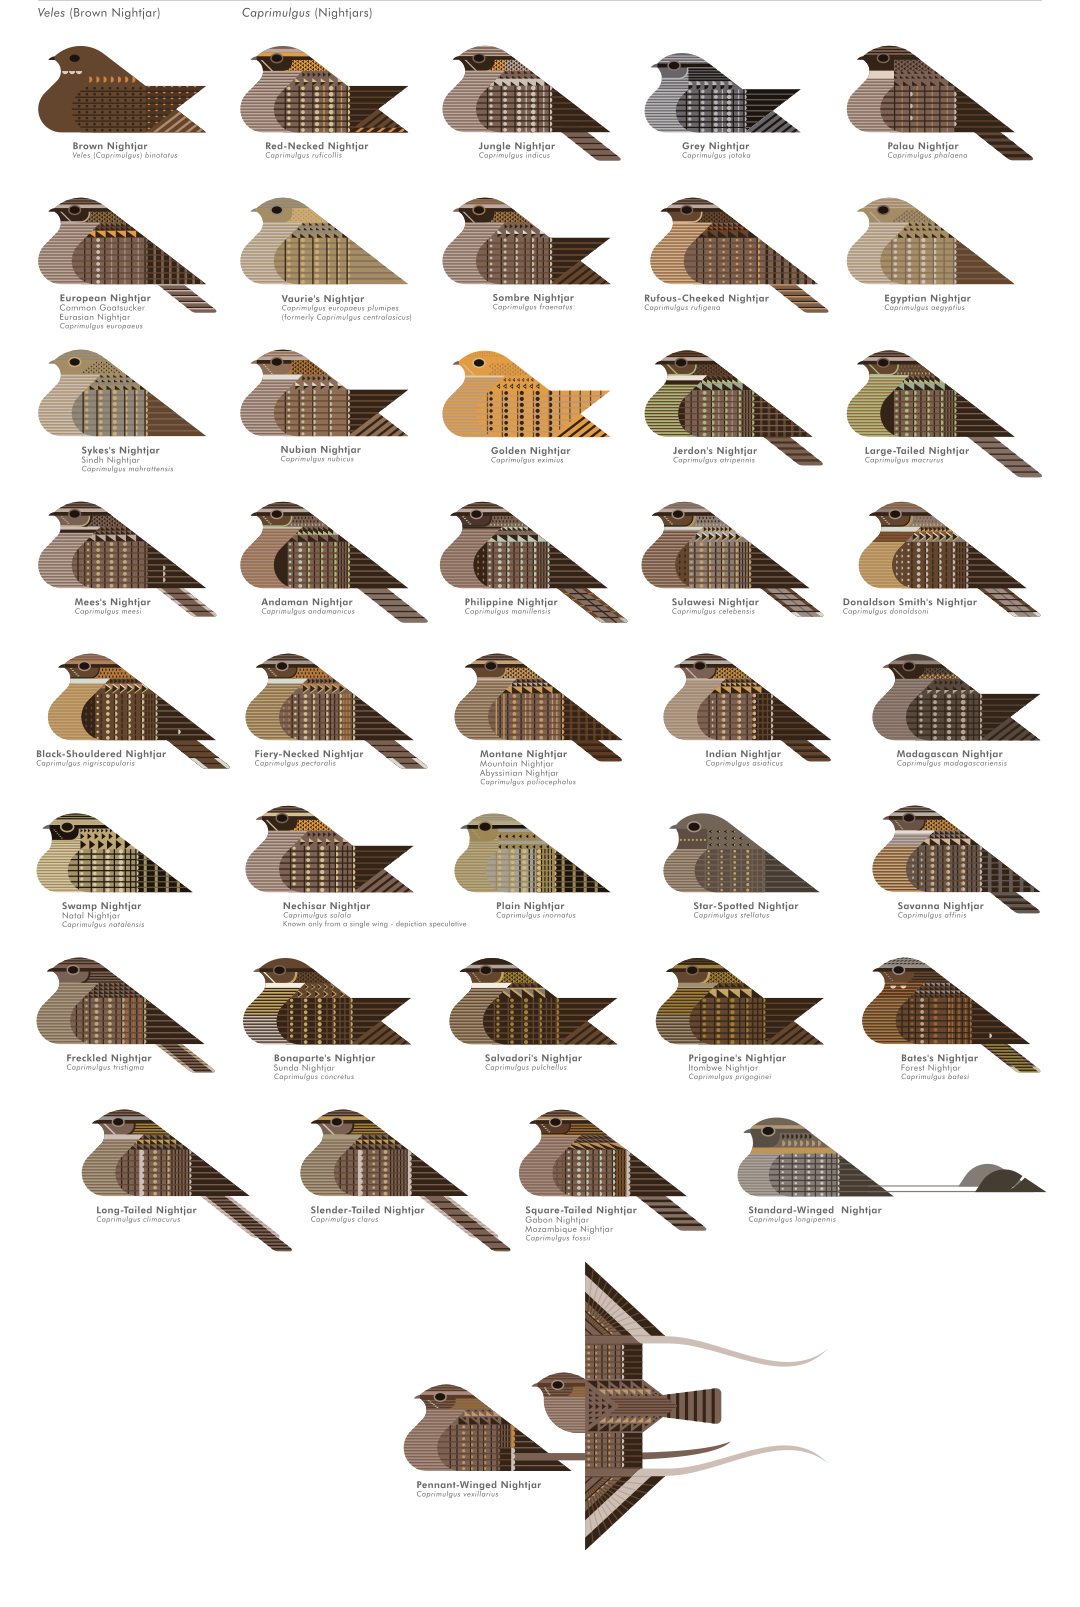 scott partridge - ave - avian vector encyclopedia - nightjars CAPRIMULGIFORMES - bird vector art